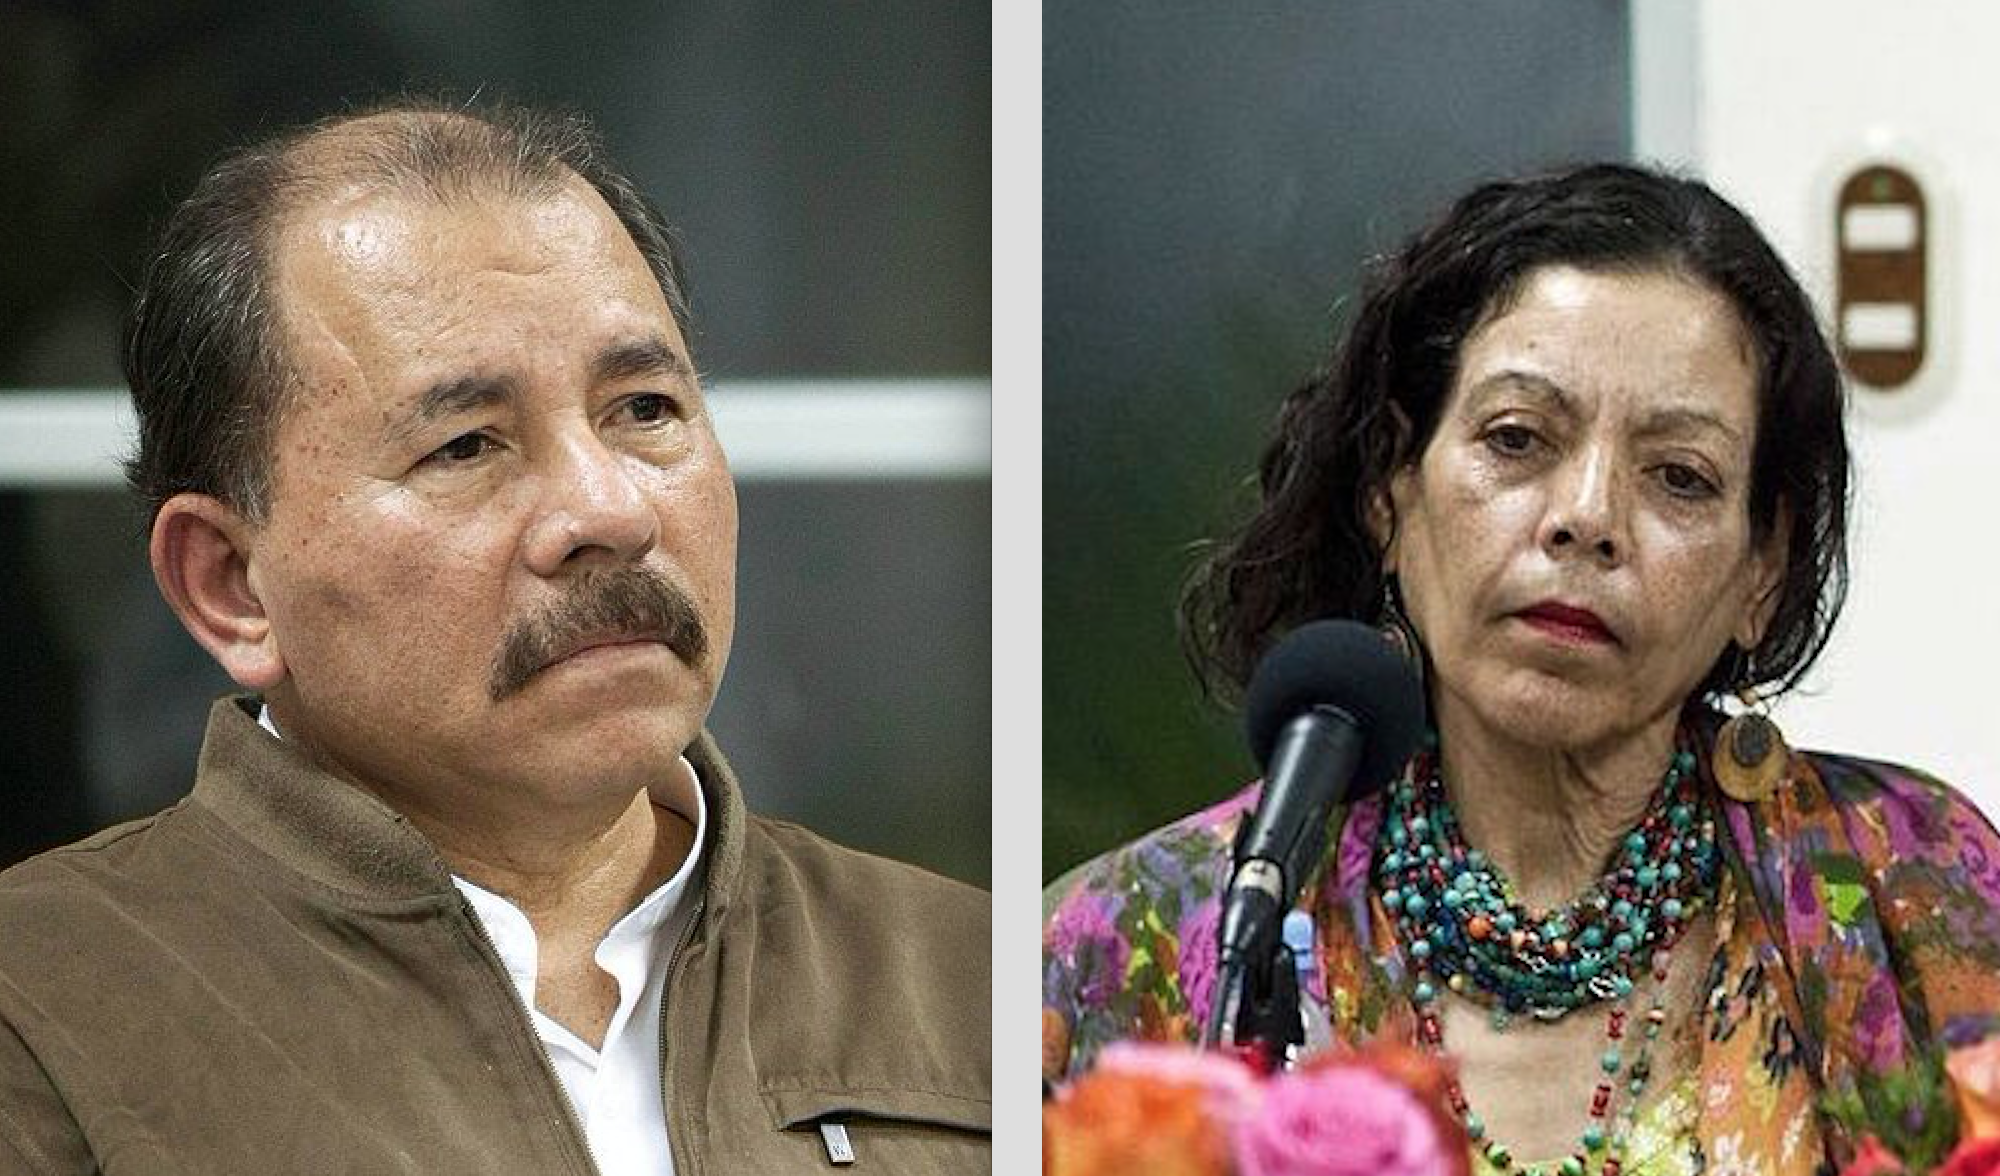 President Ortega and his wife, vice-president Rosario Murillo.